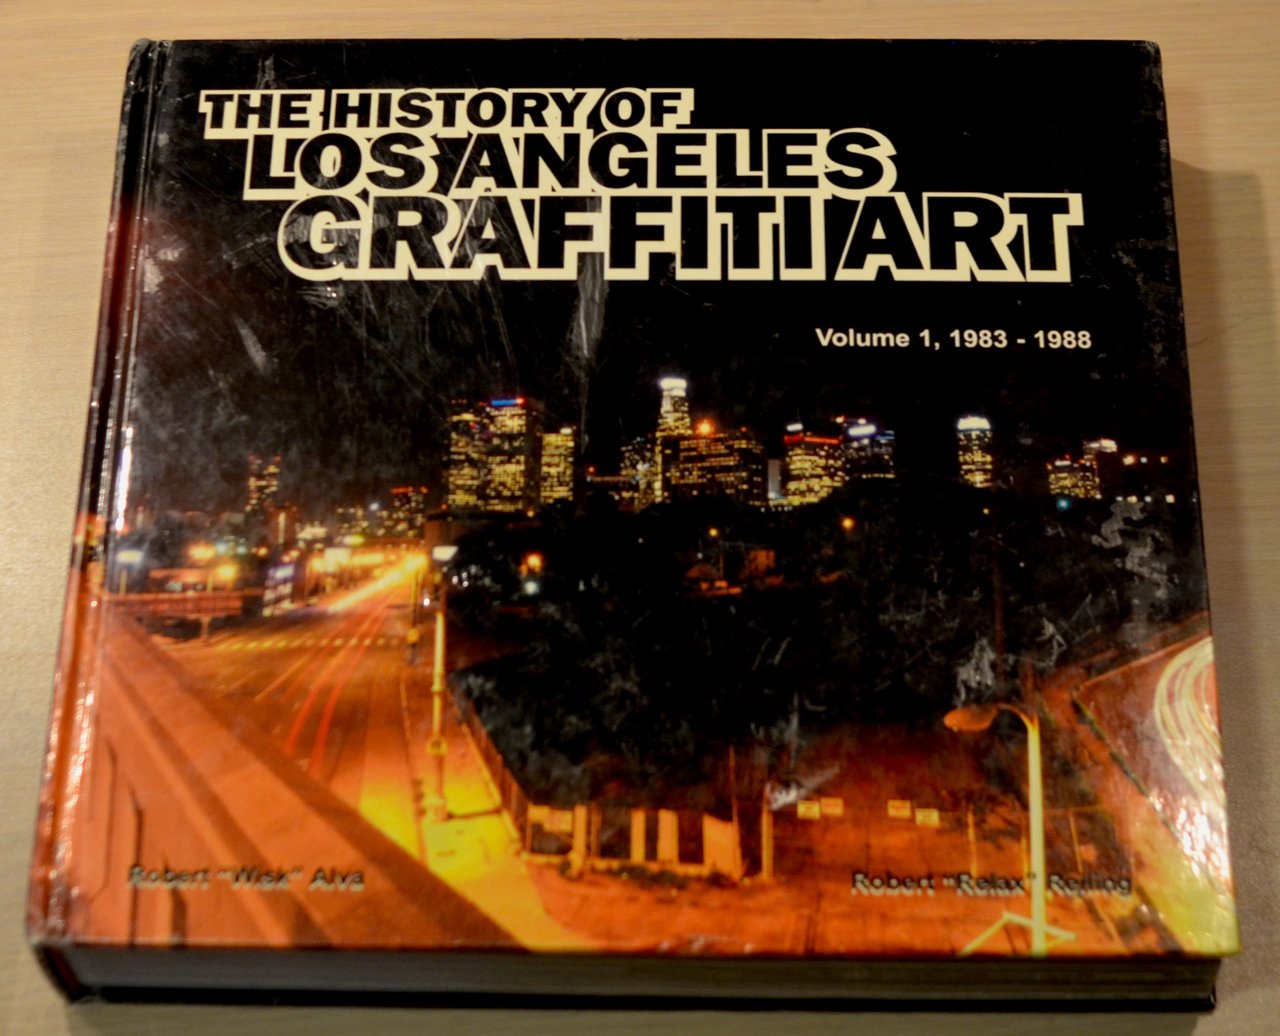 The History of Los Angeles Graffiti Art: Volume 1, 1983-1988